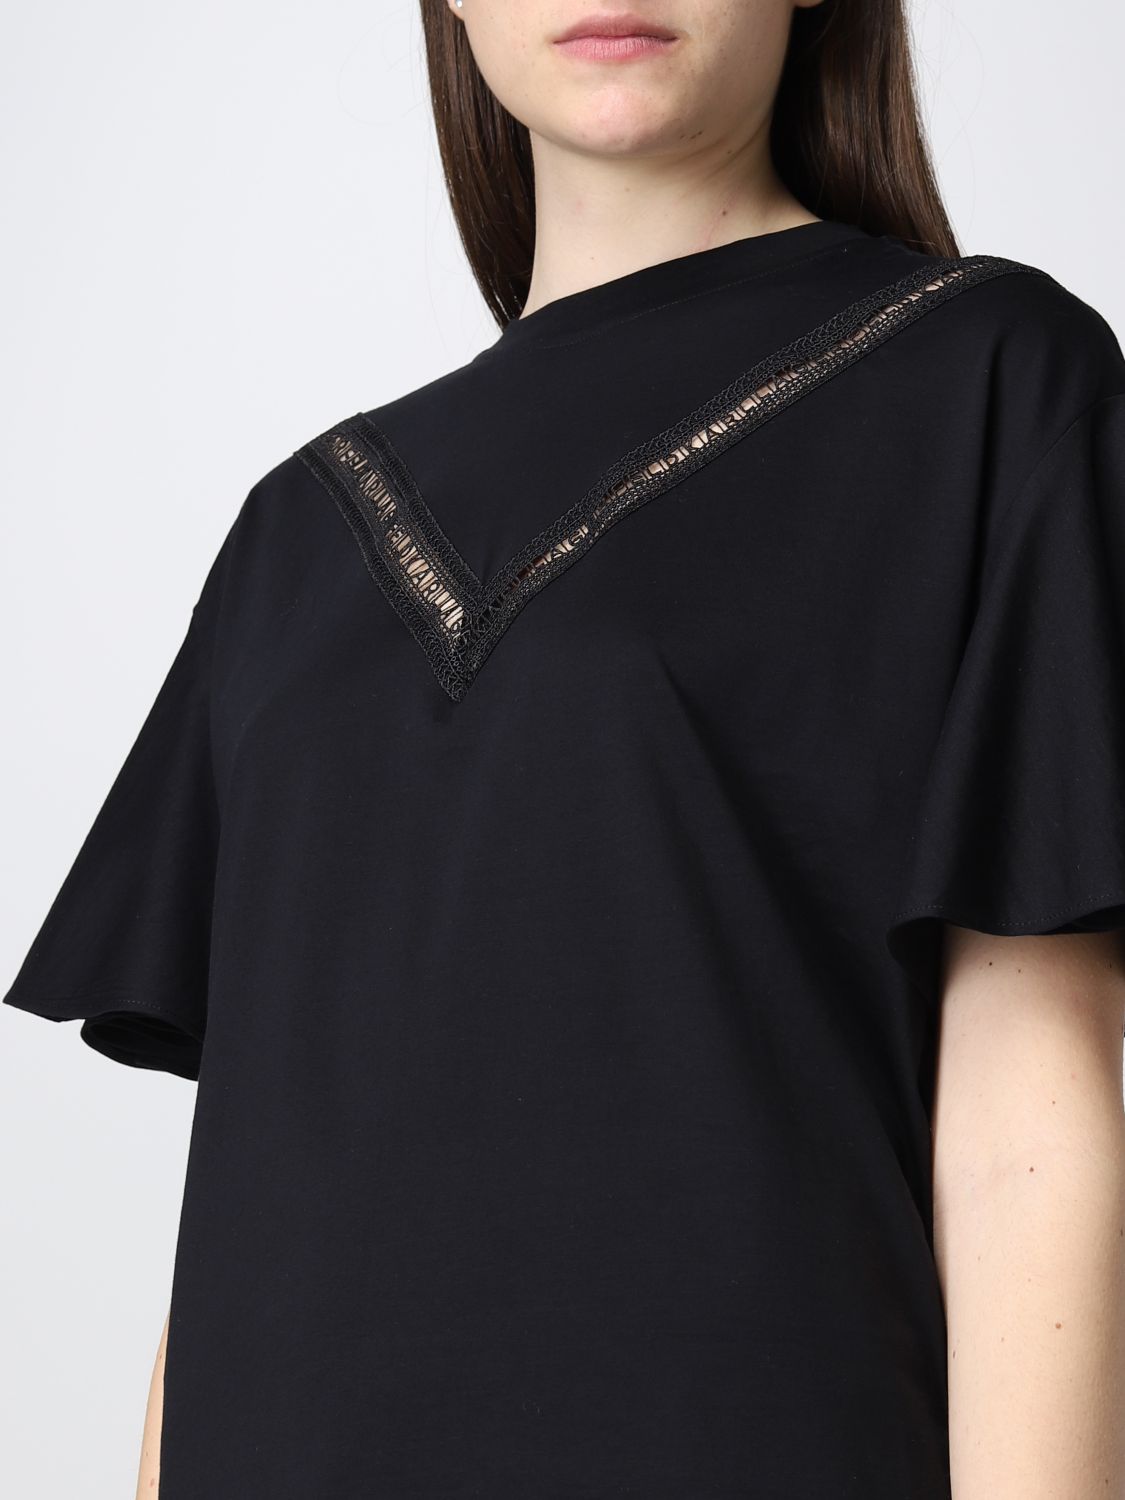 T-Shirt Karl Lagerfeld: Karl Lagerfeld t-shirt for women black 3